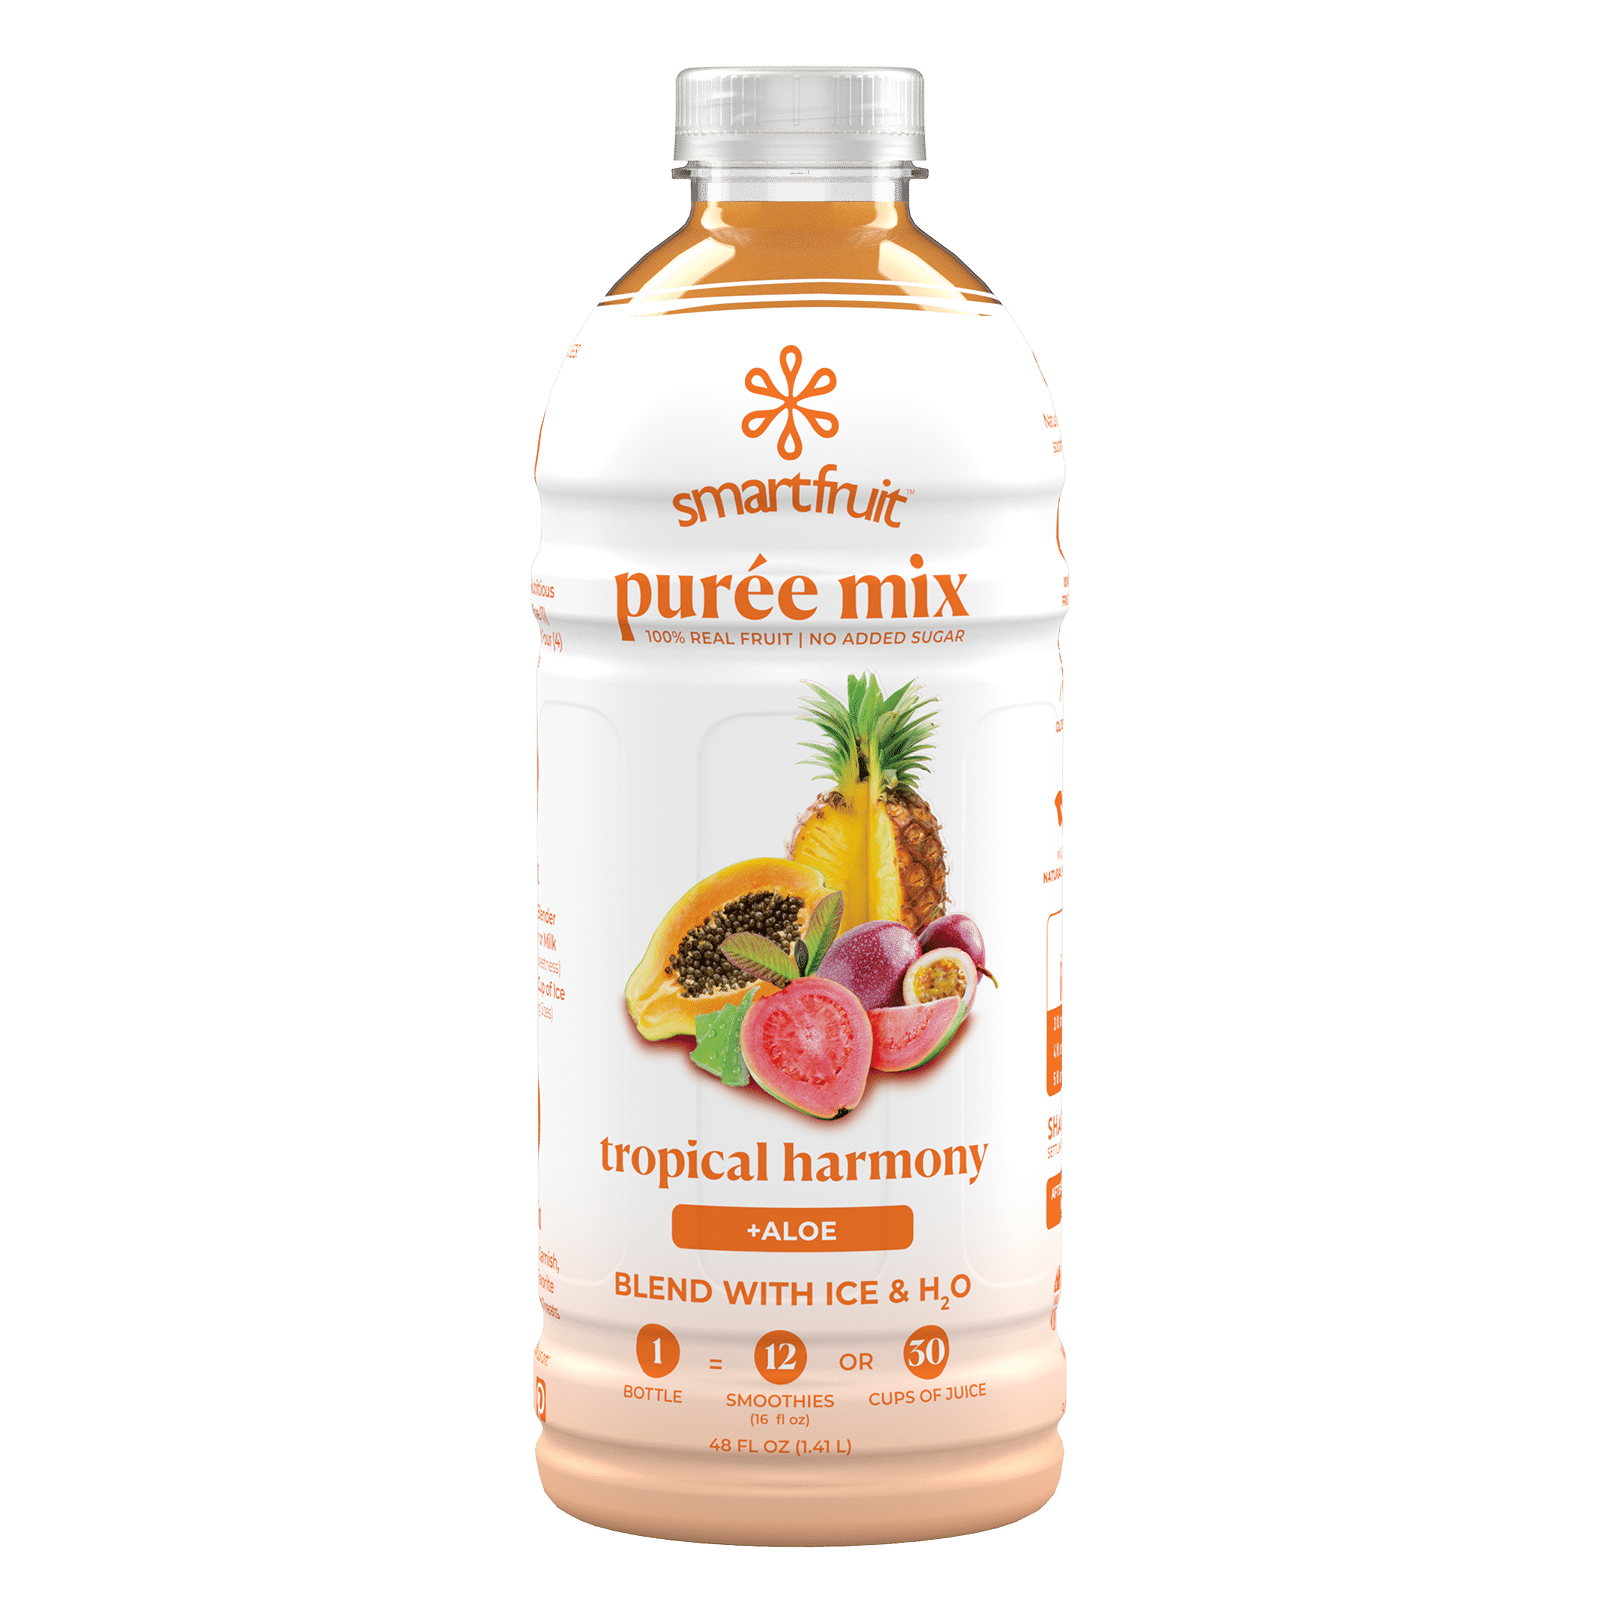 Smartfruit Tropical Harmony Puree Mix bottle